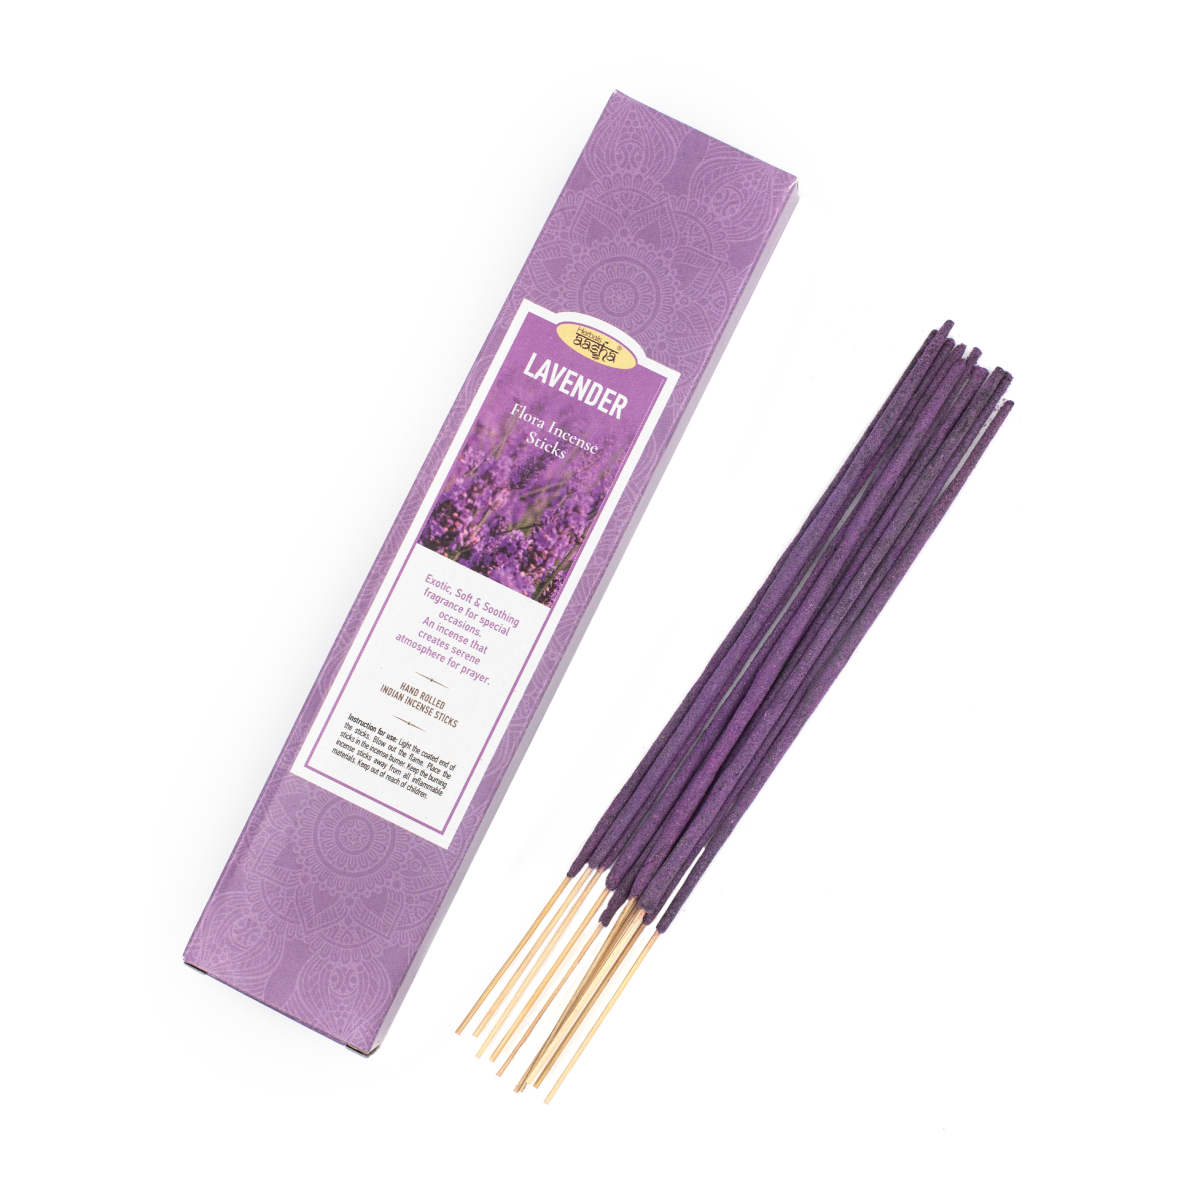 Ароматические палочки Aasha Herbals Лаванда (Lavender), 10 шт ароматические палочки aasha herbals лесная чаща deep woods 10 шт